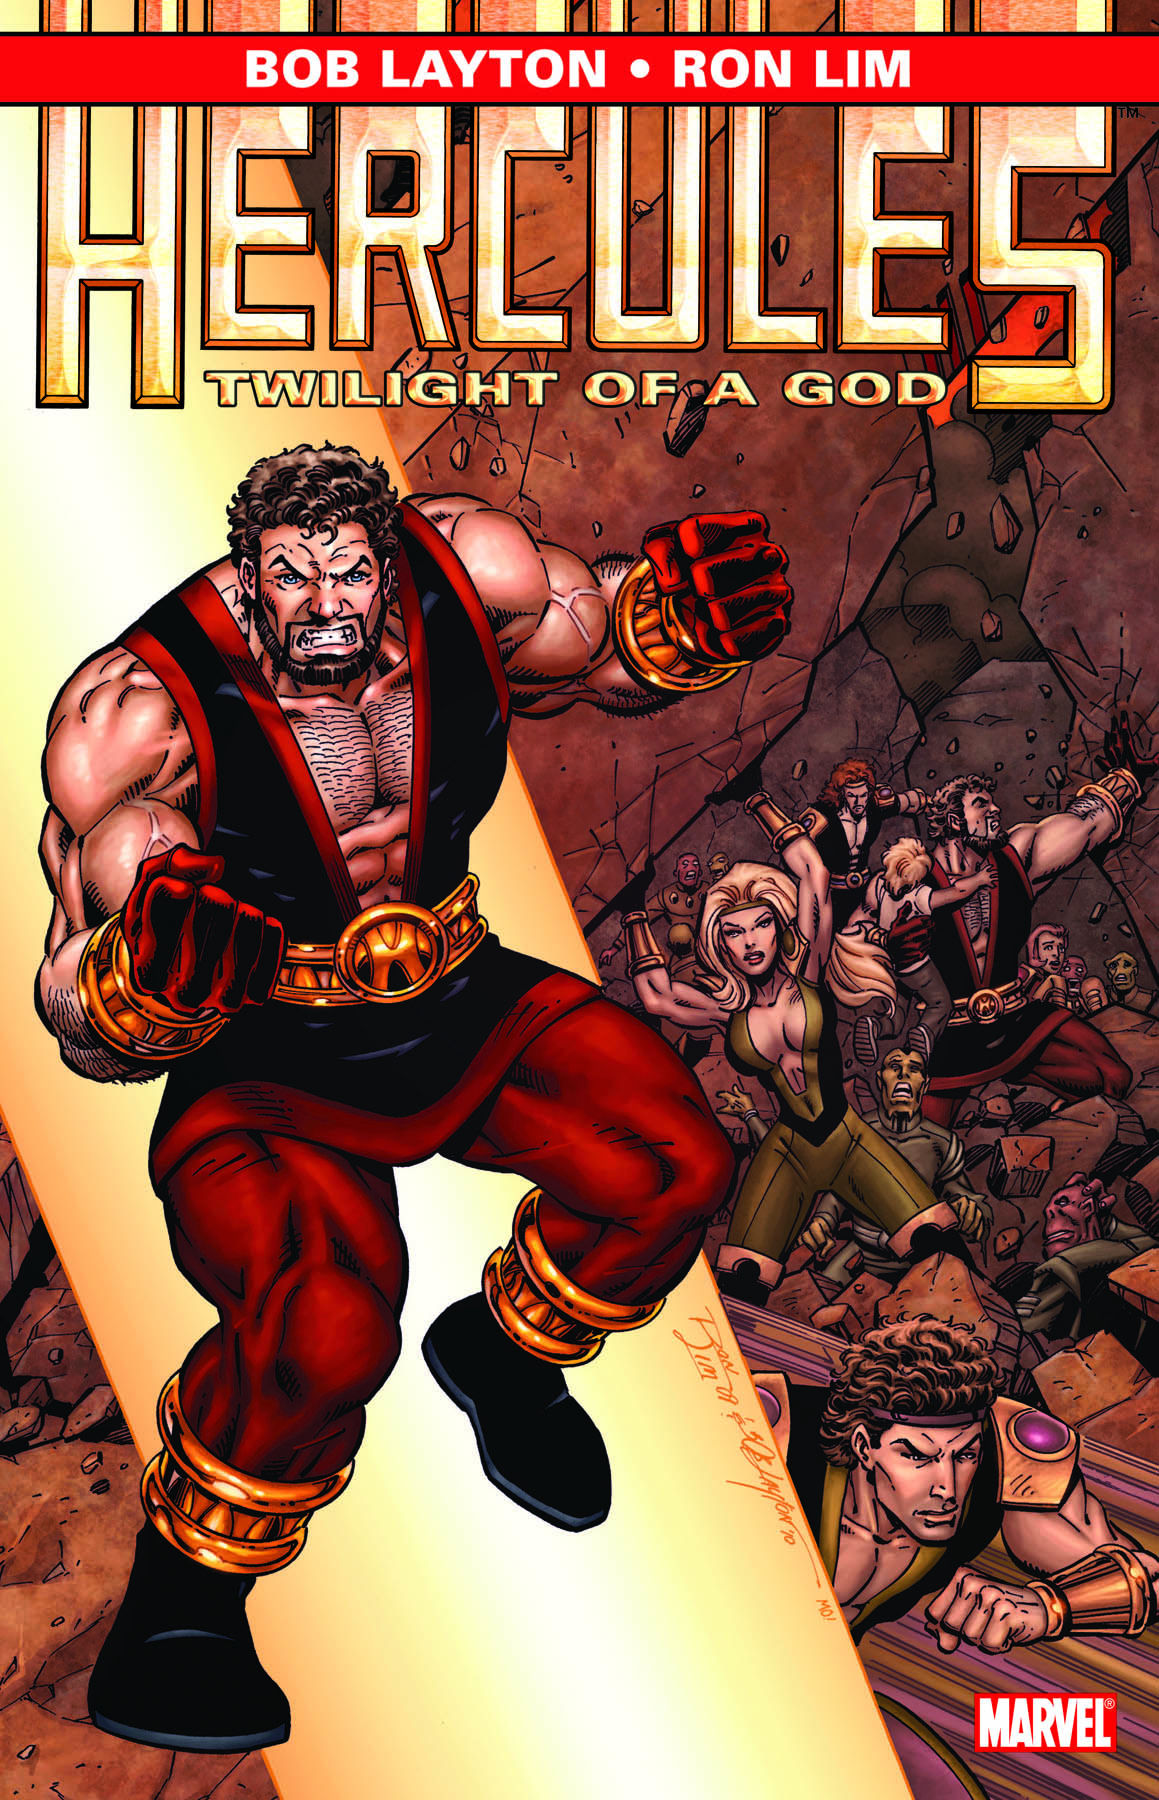 Hercules: Twilight of a God (Trade Paperback)